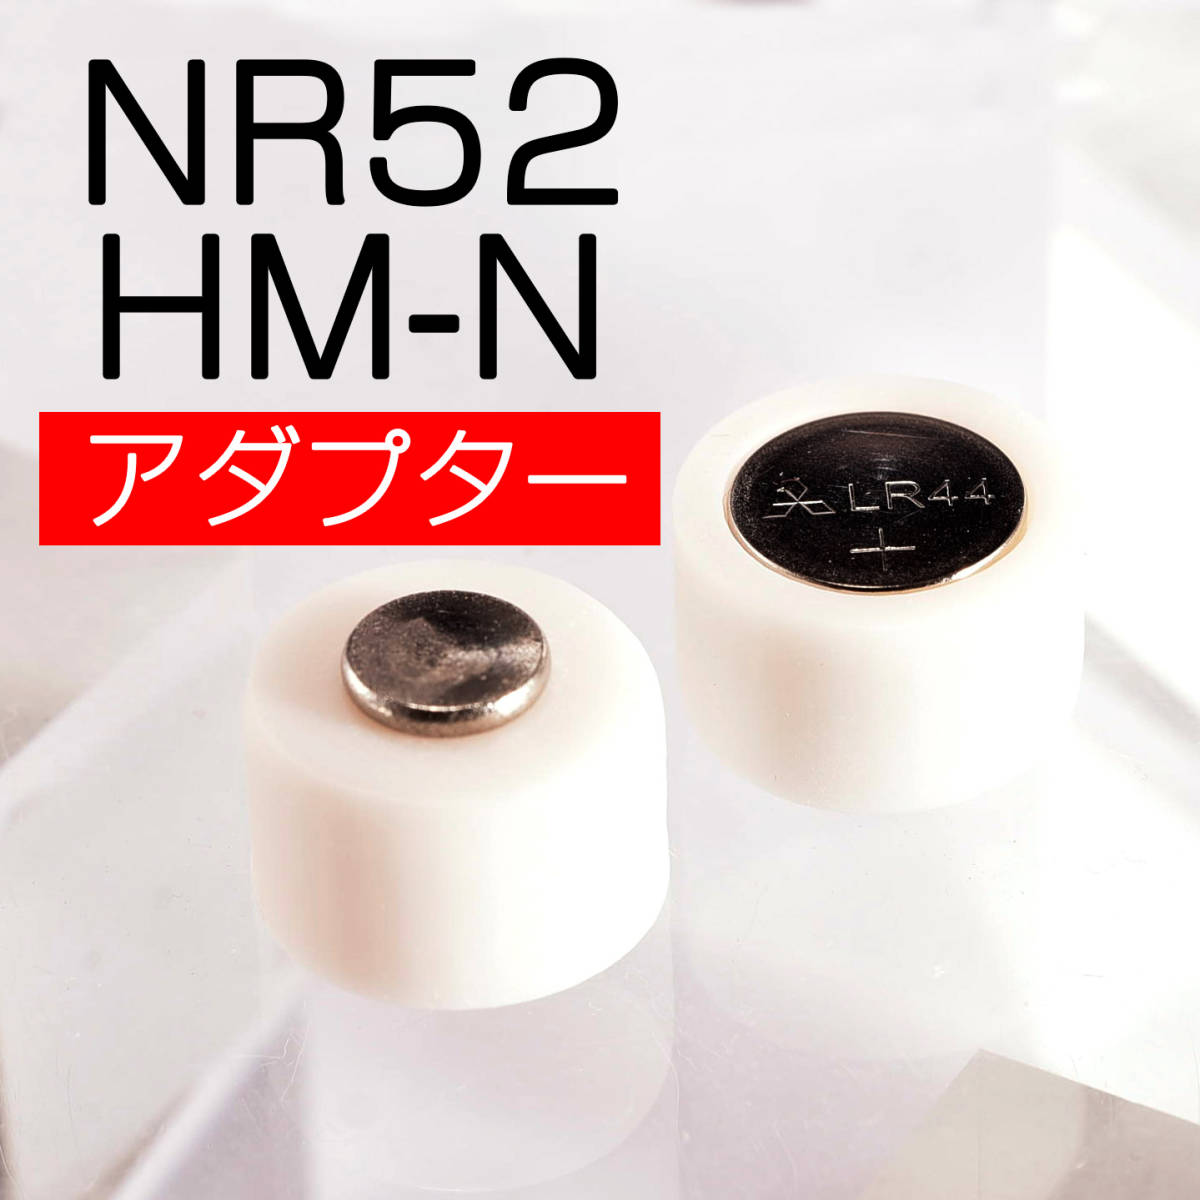 NR52 HM-N батарейка адаптор 2 шт. комплект LR44 SR44 Canon te-toE/ matic Olympus EC ECR ED высокий matic E/F Yashica электро 35gx